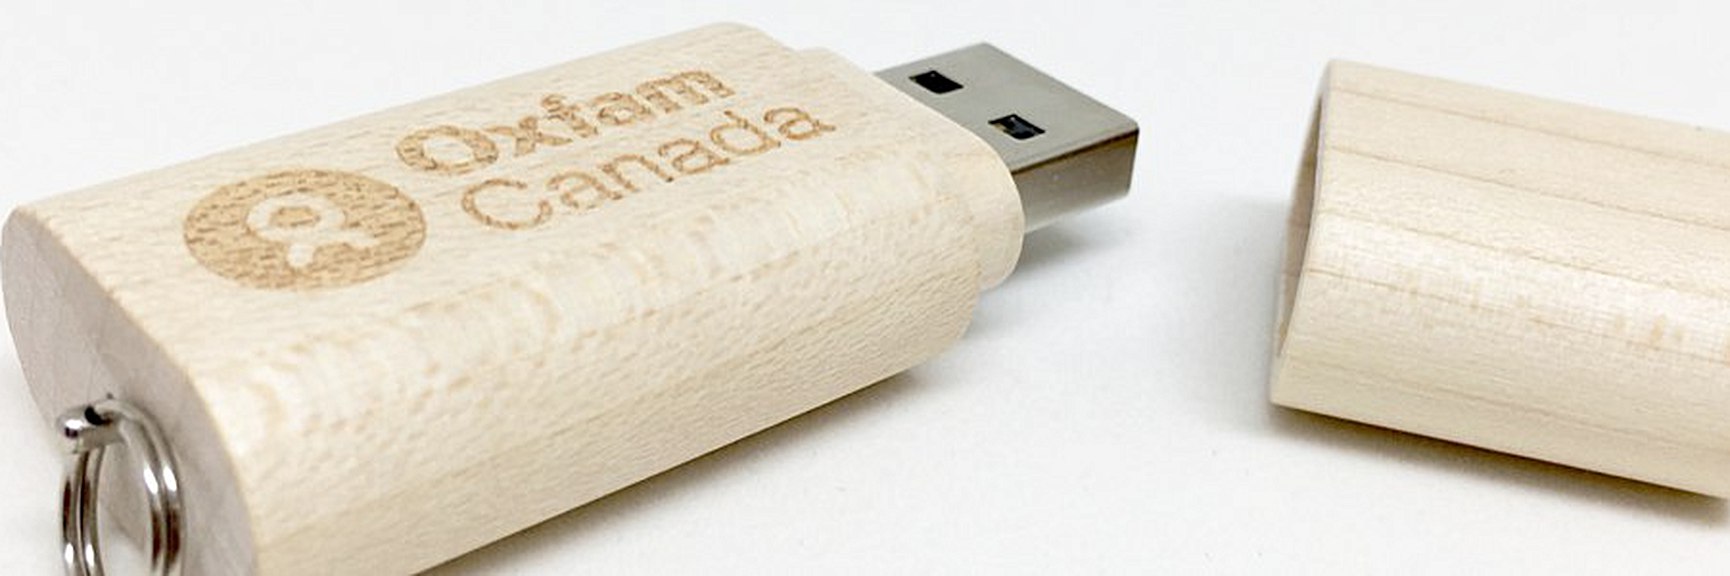 USB stick bedrukken printing services